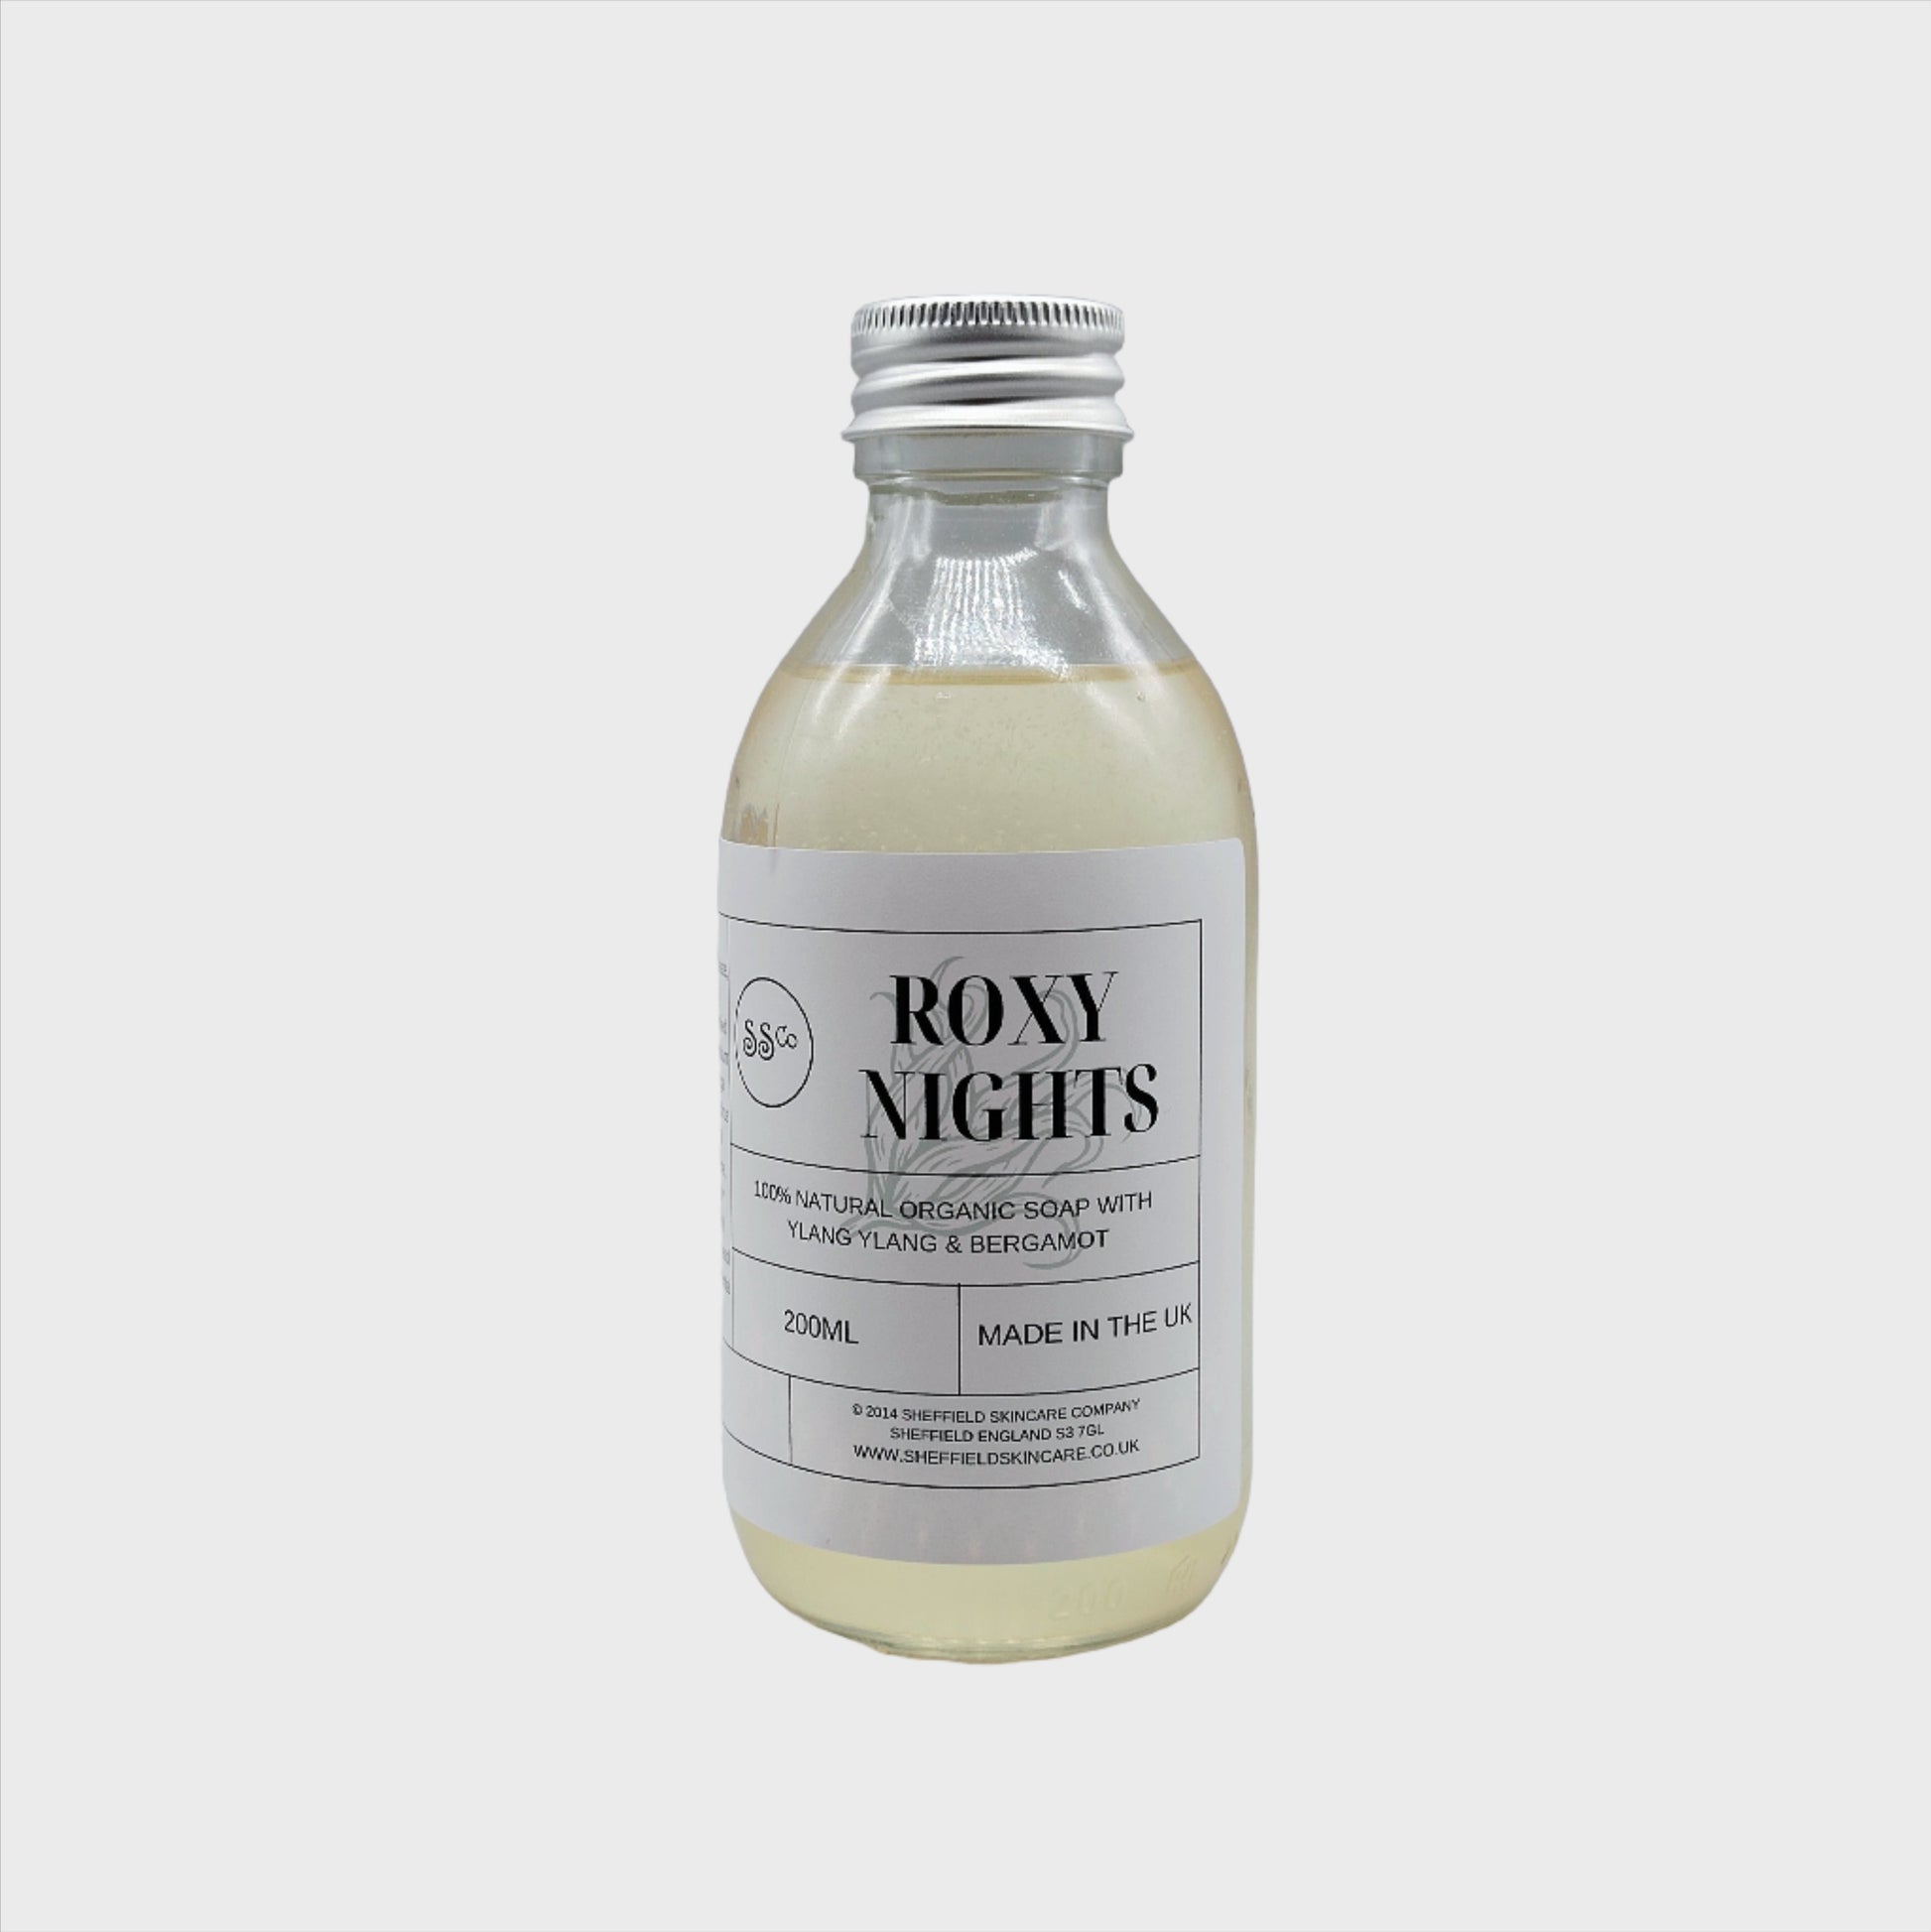 Roxy Nights soap 200ml with cap